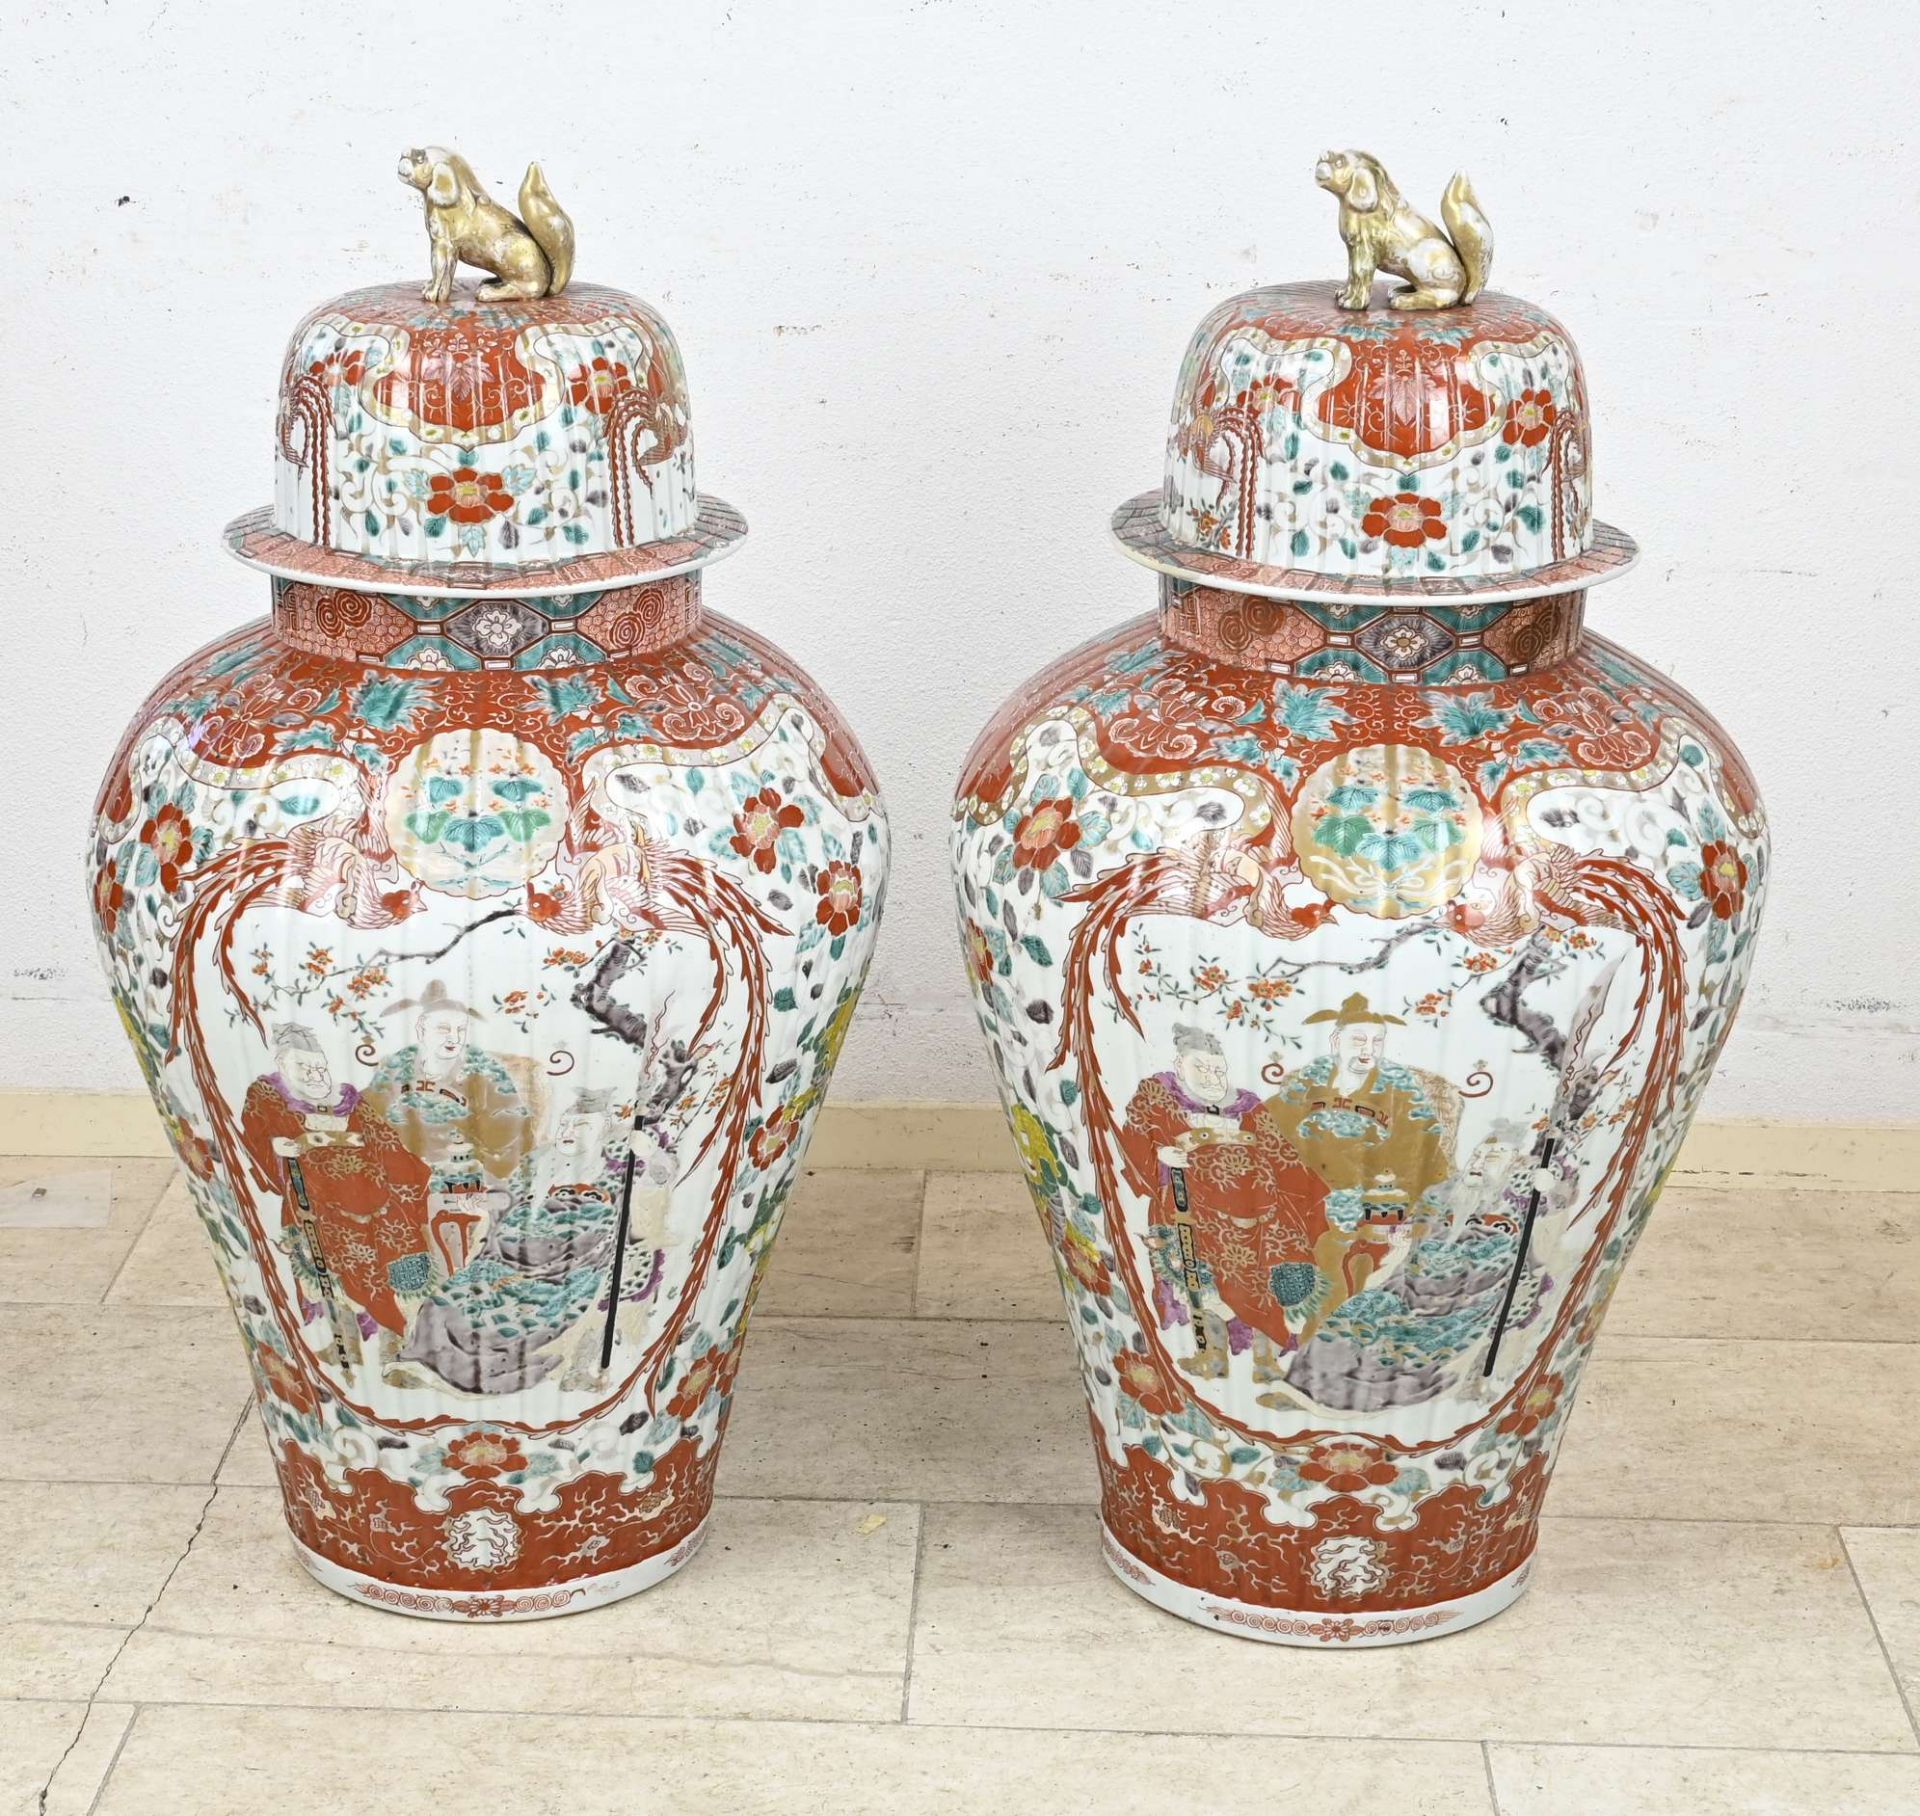 Two large Japanese lidded pots, H 92 x Ø 45 cm.